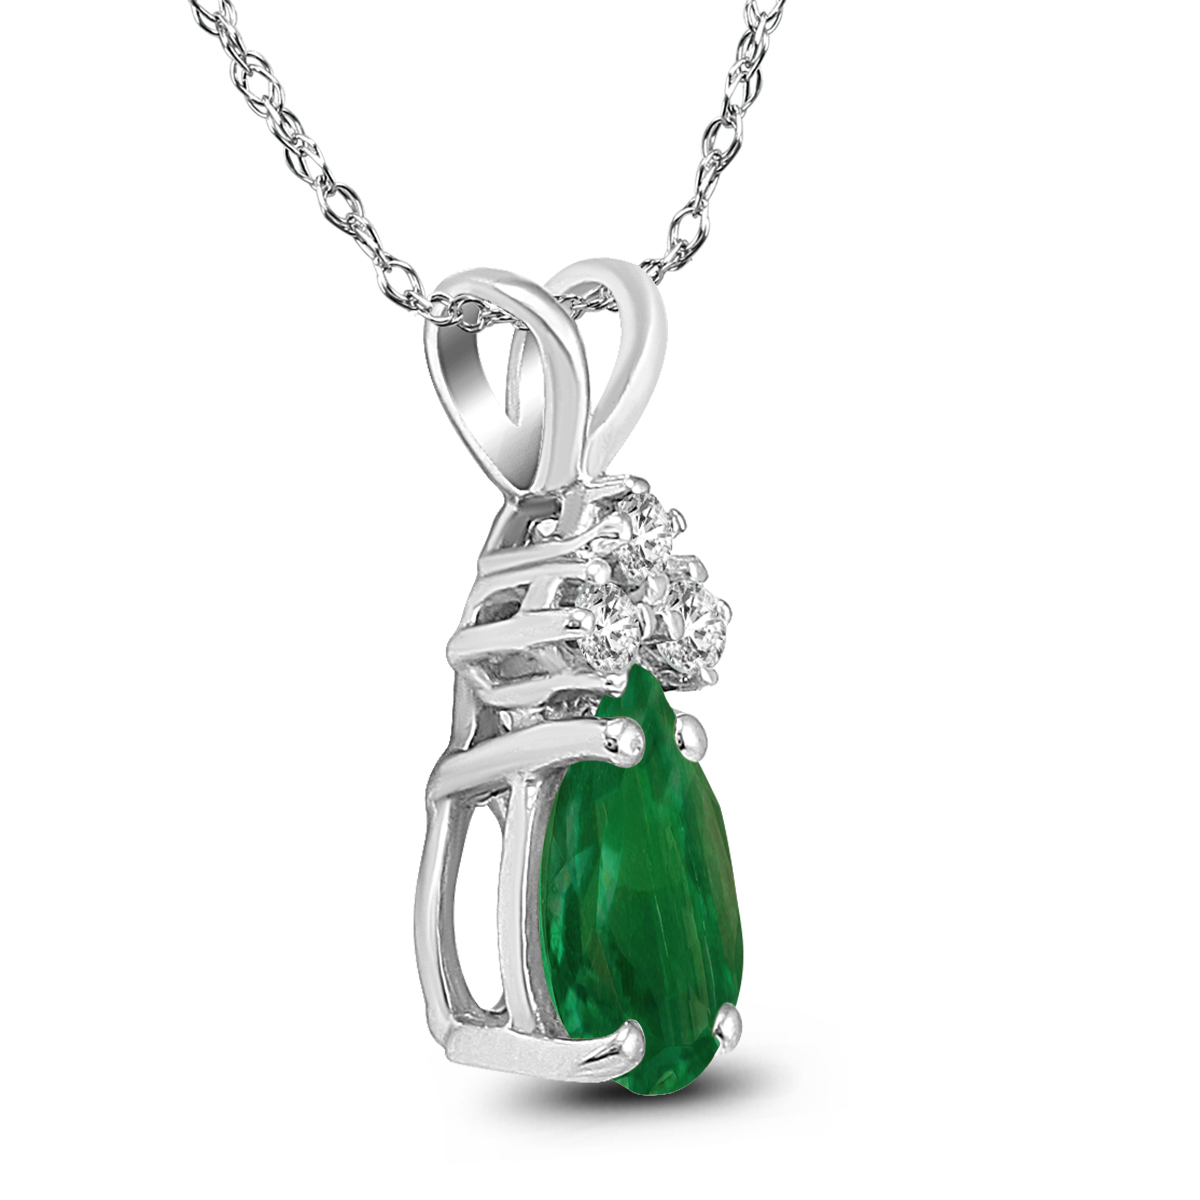 szul.com 14K White Gold 6x4MM Pear Emerald and Diamond Pendant